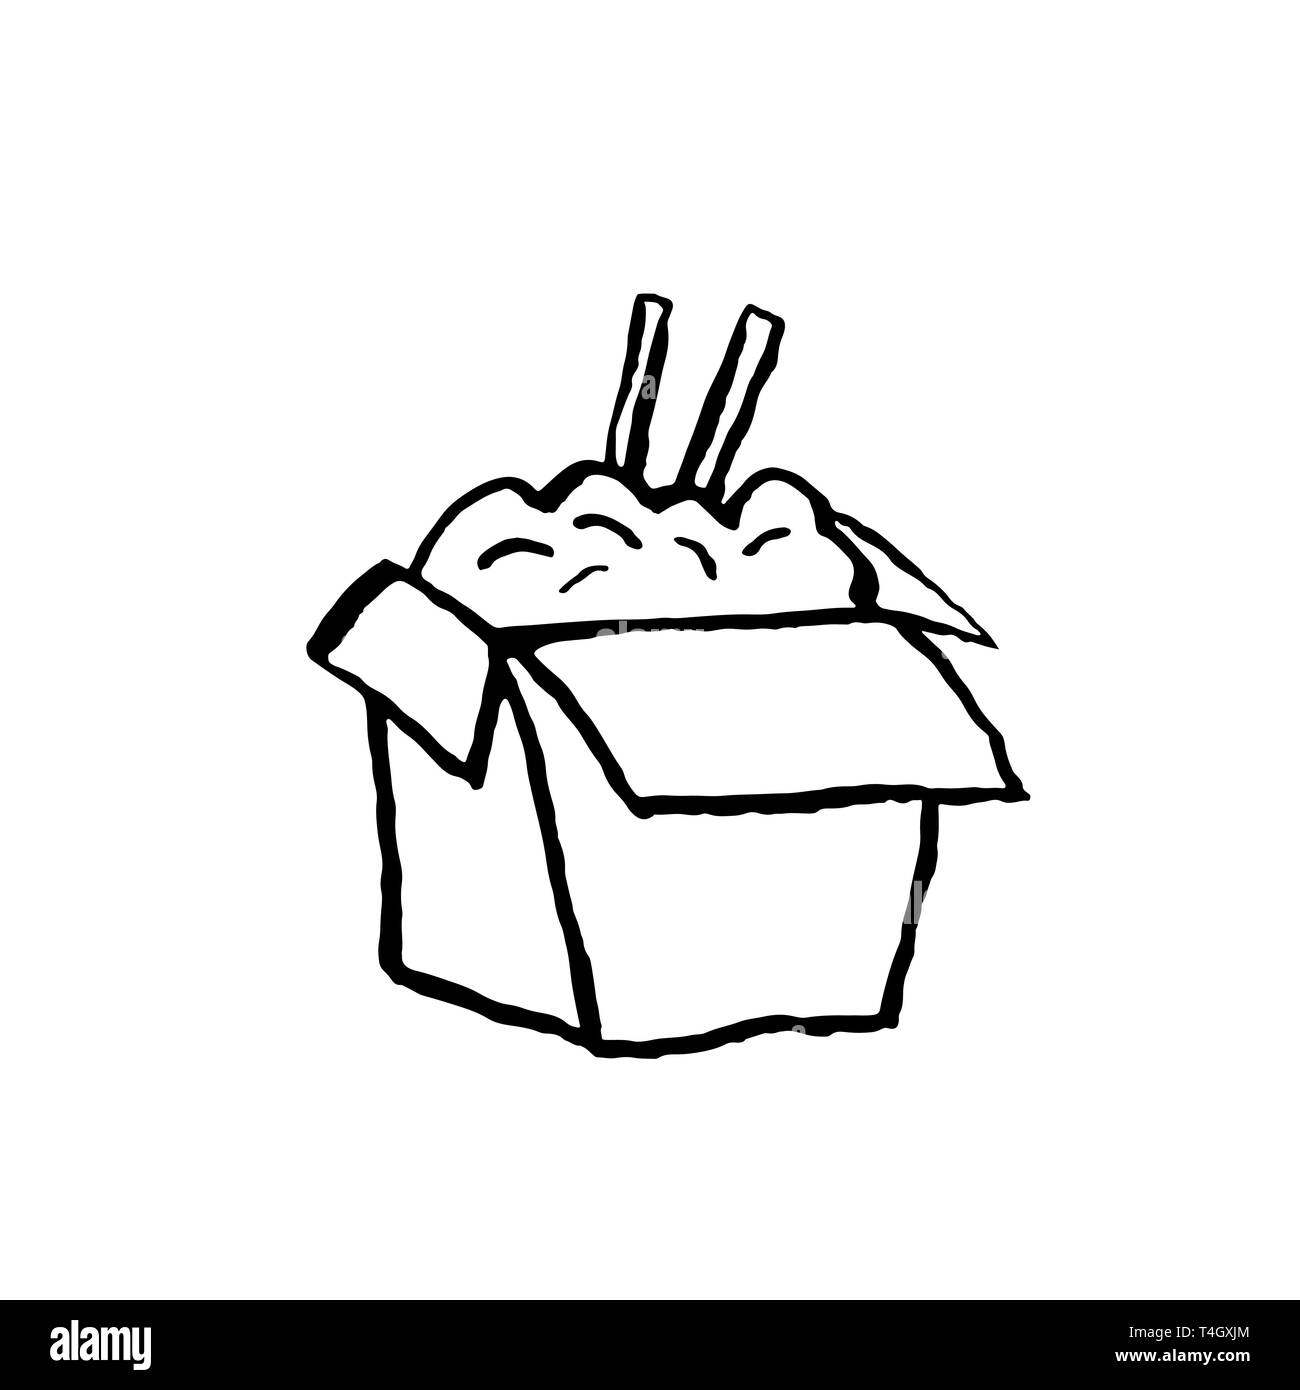 Rice in box icon. Grunge ink brush vector illustration. Food flat illustration. Stock Vector